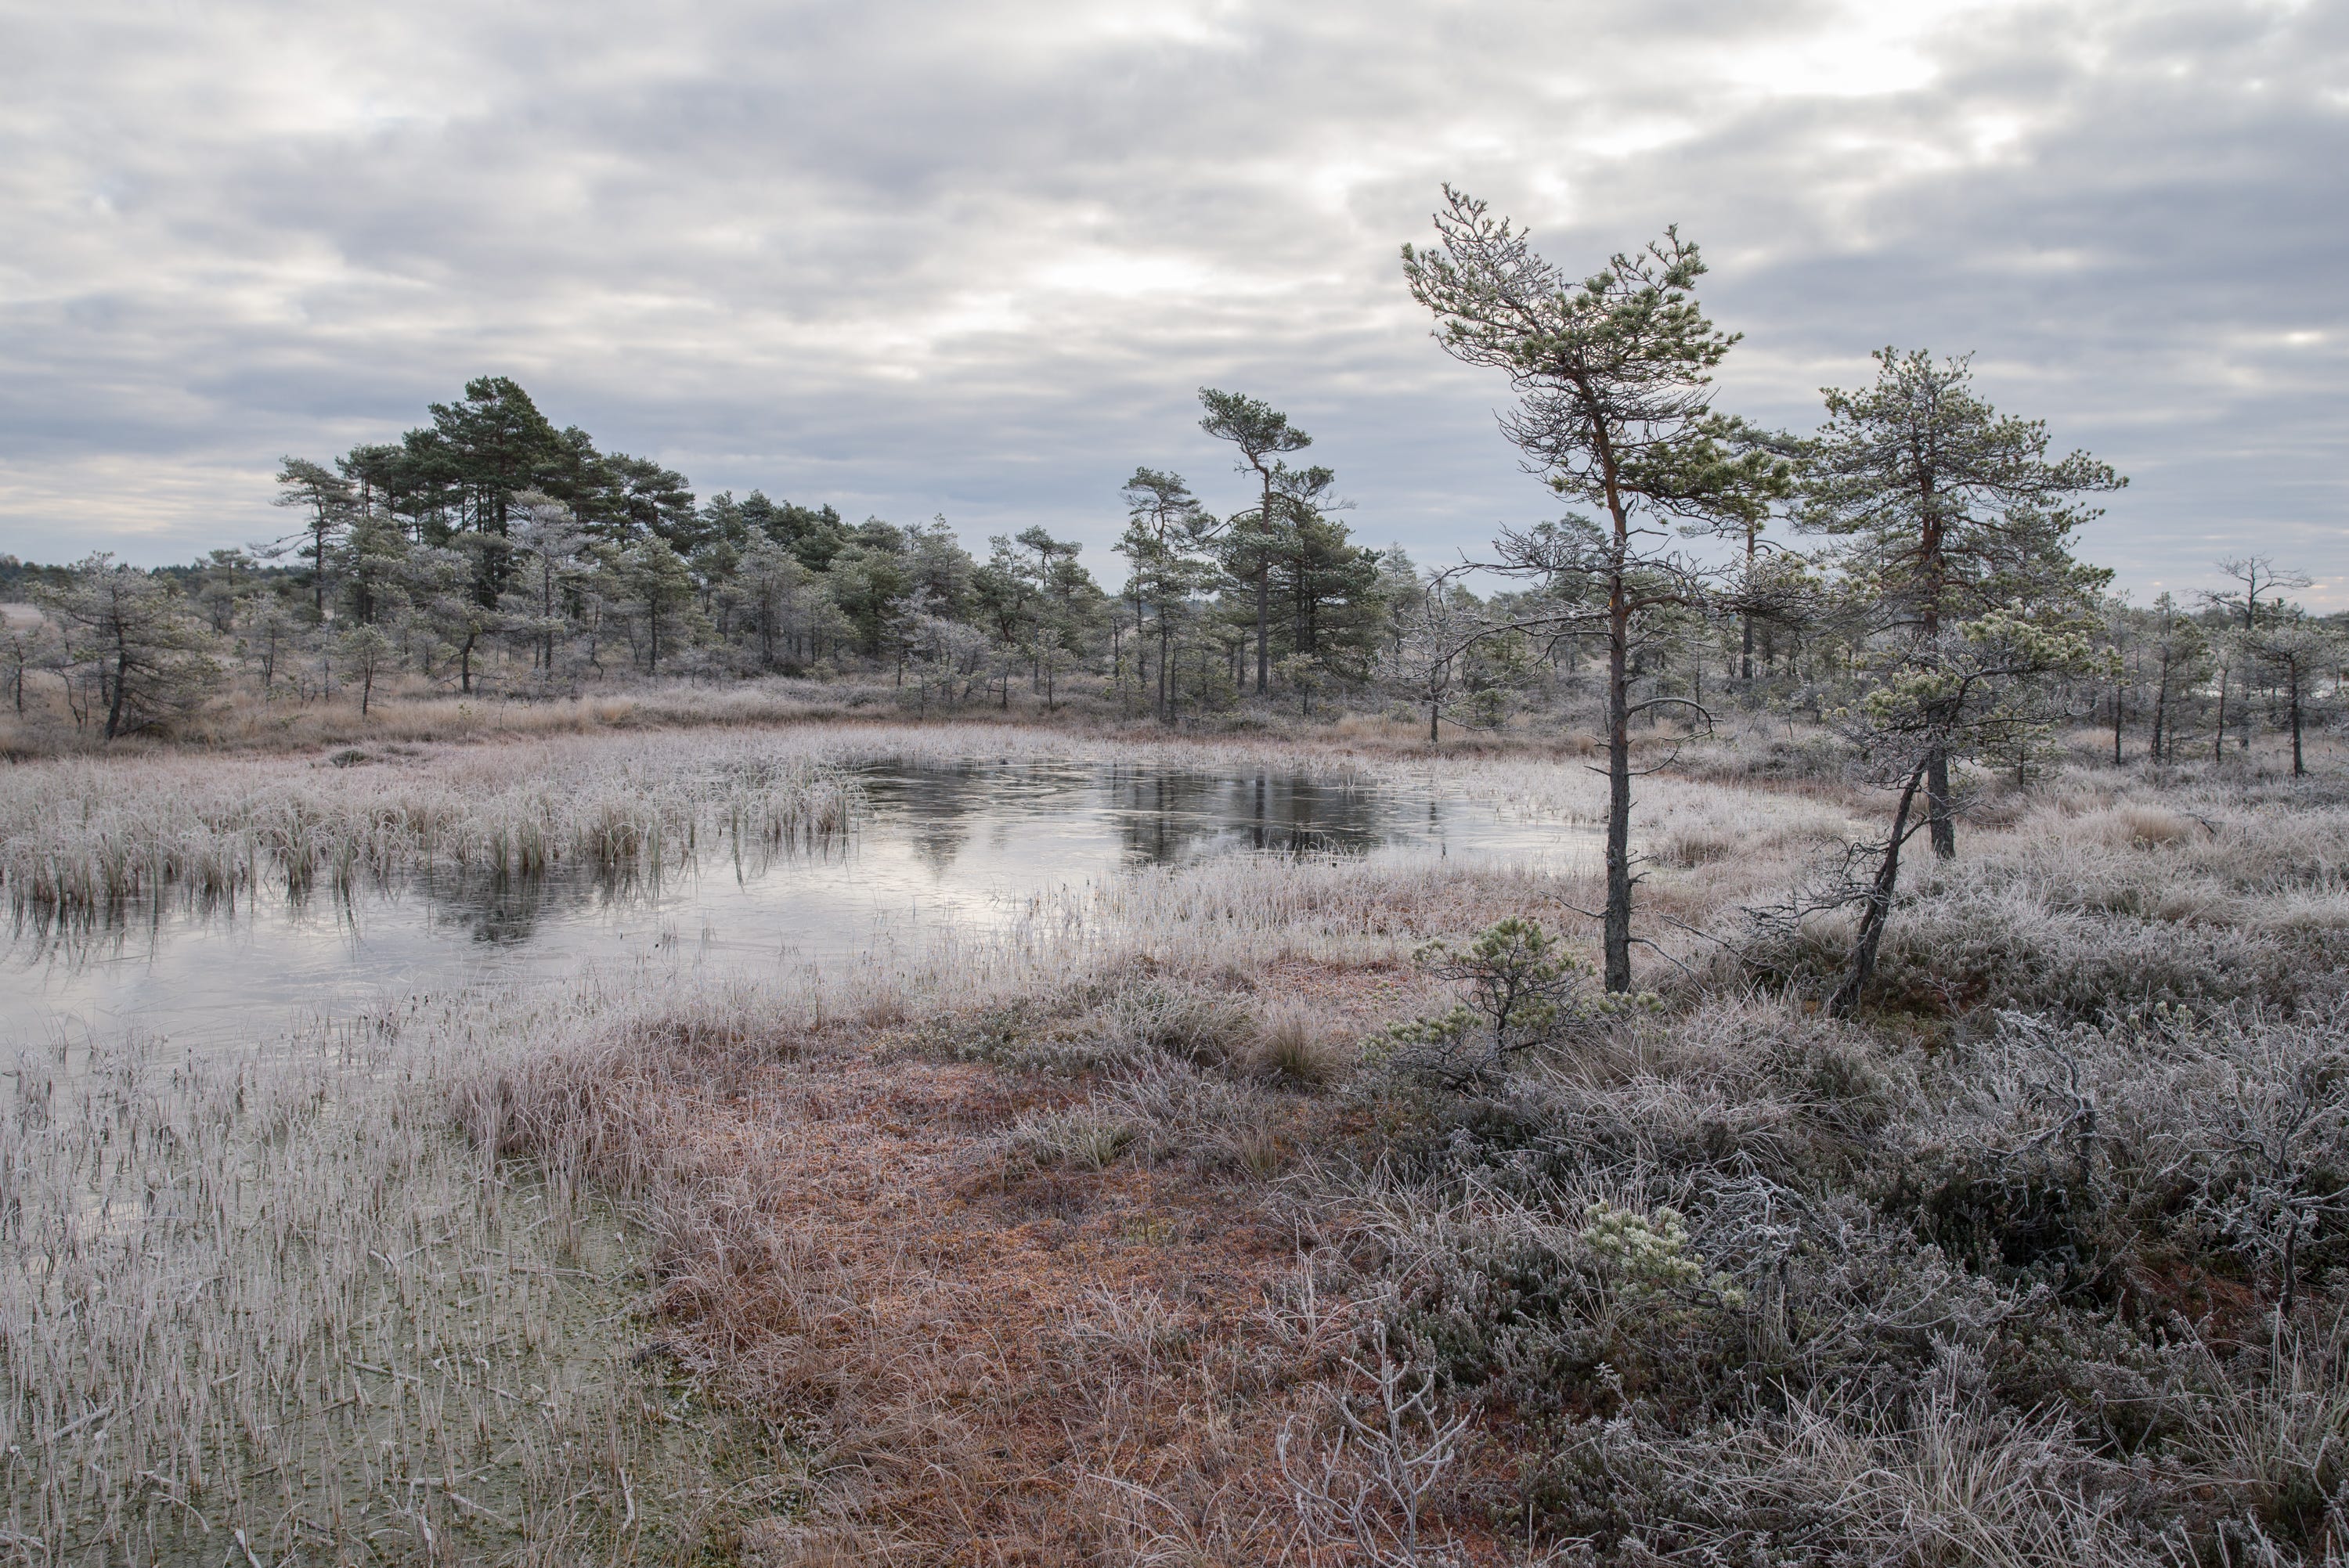 How I fell in love with Estonian nature | by Romet Vaino | Medium